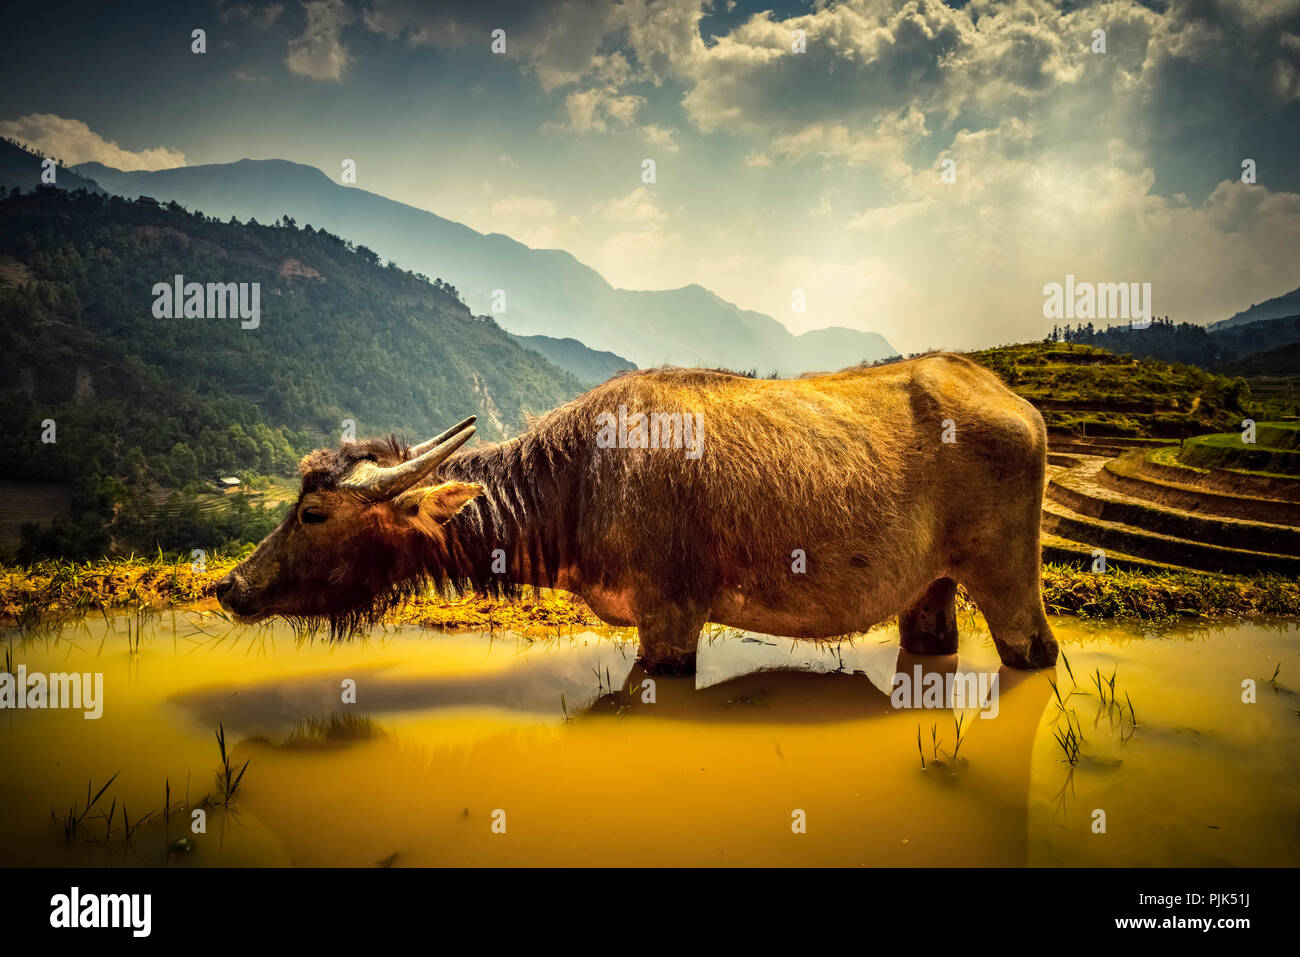 Asia, Southeast Asia, North Vietnam, Vietnam, Sapa, mountains, mountainscape, Water buffalo, Stock Photo